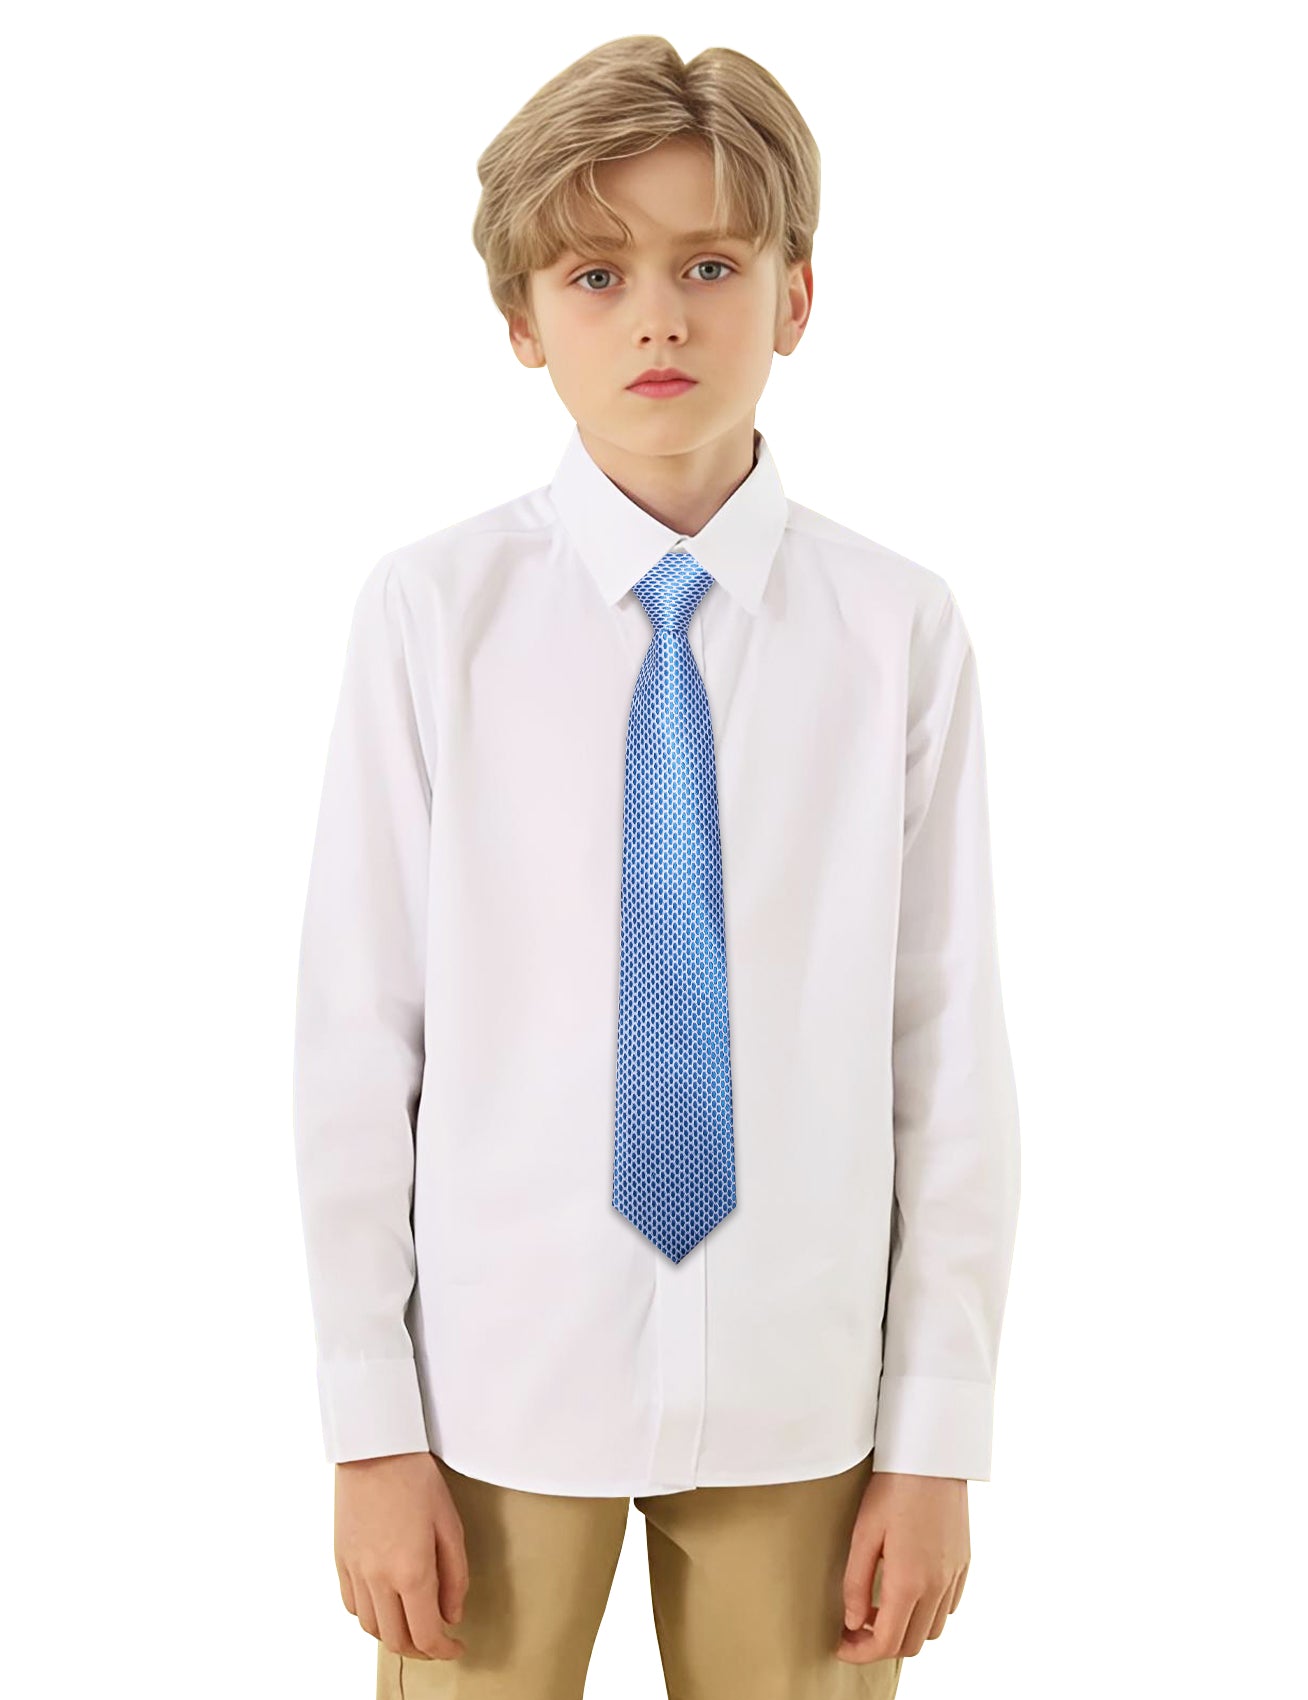 Barry.wang Kids Tie Blue Irregular Grid Children's Silk Tie Hanky Set Fashion